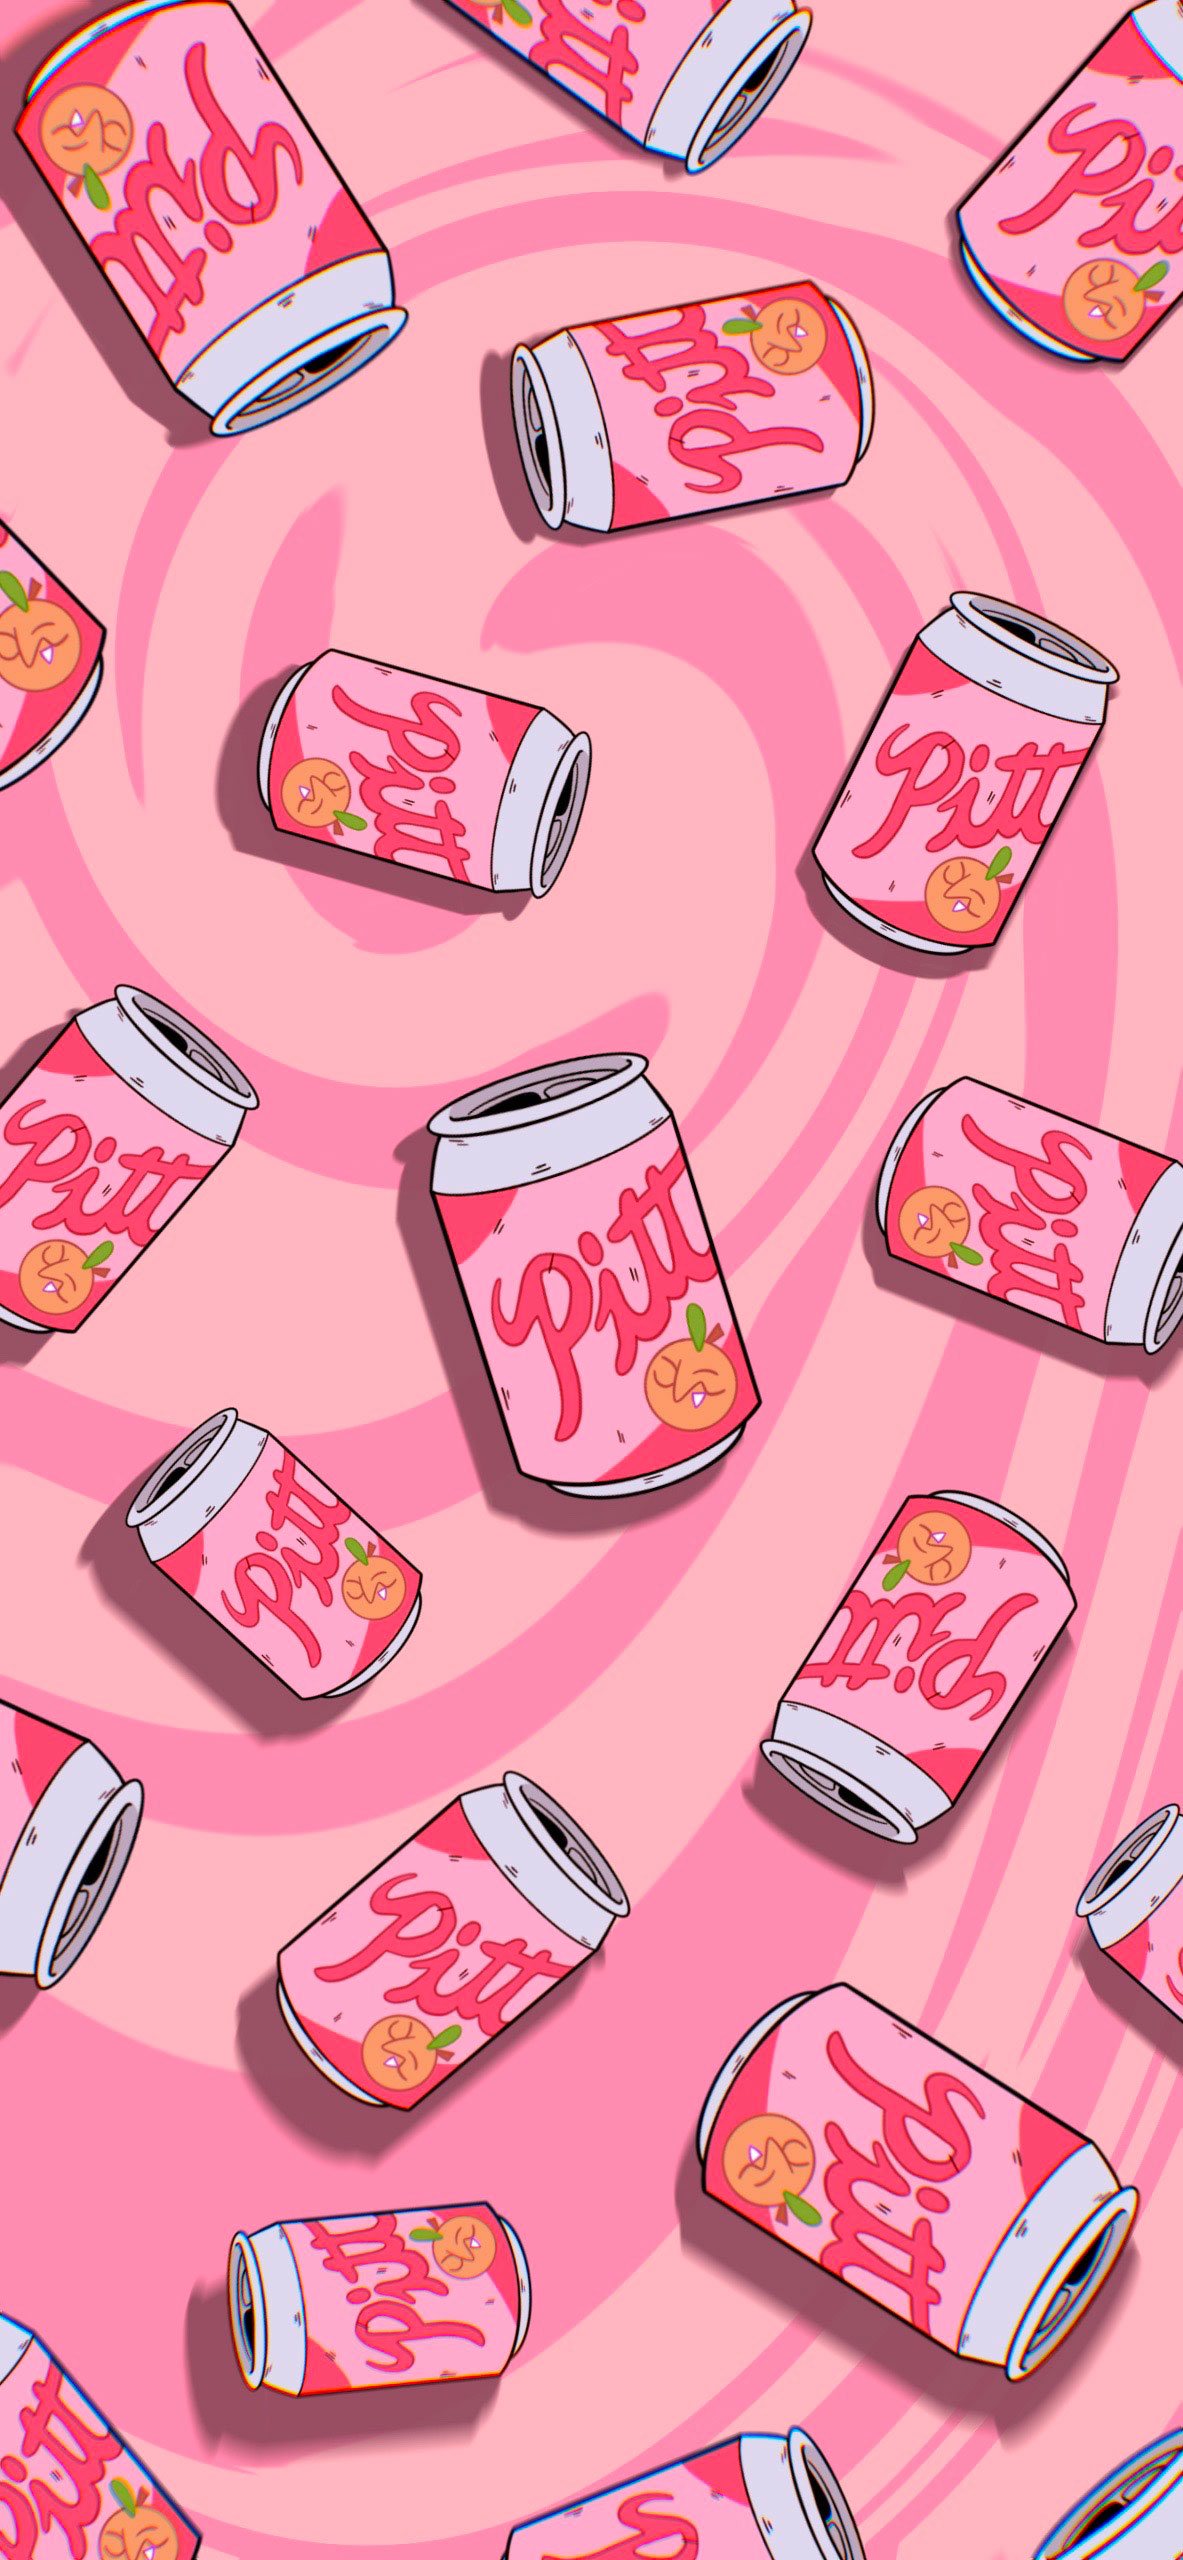 gravity falls pitt cola pink wallpaper